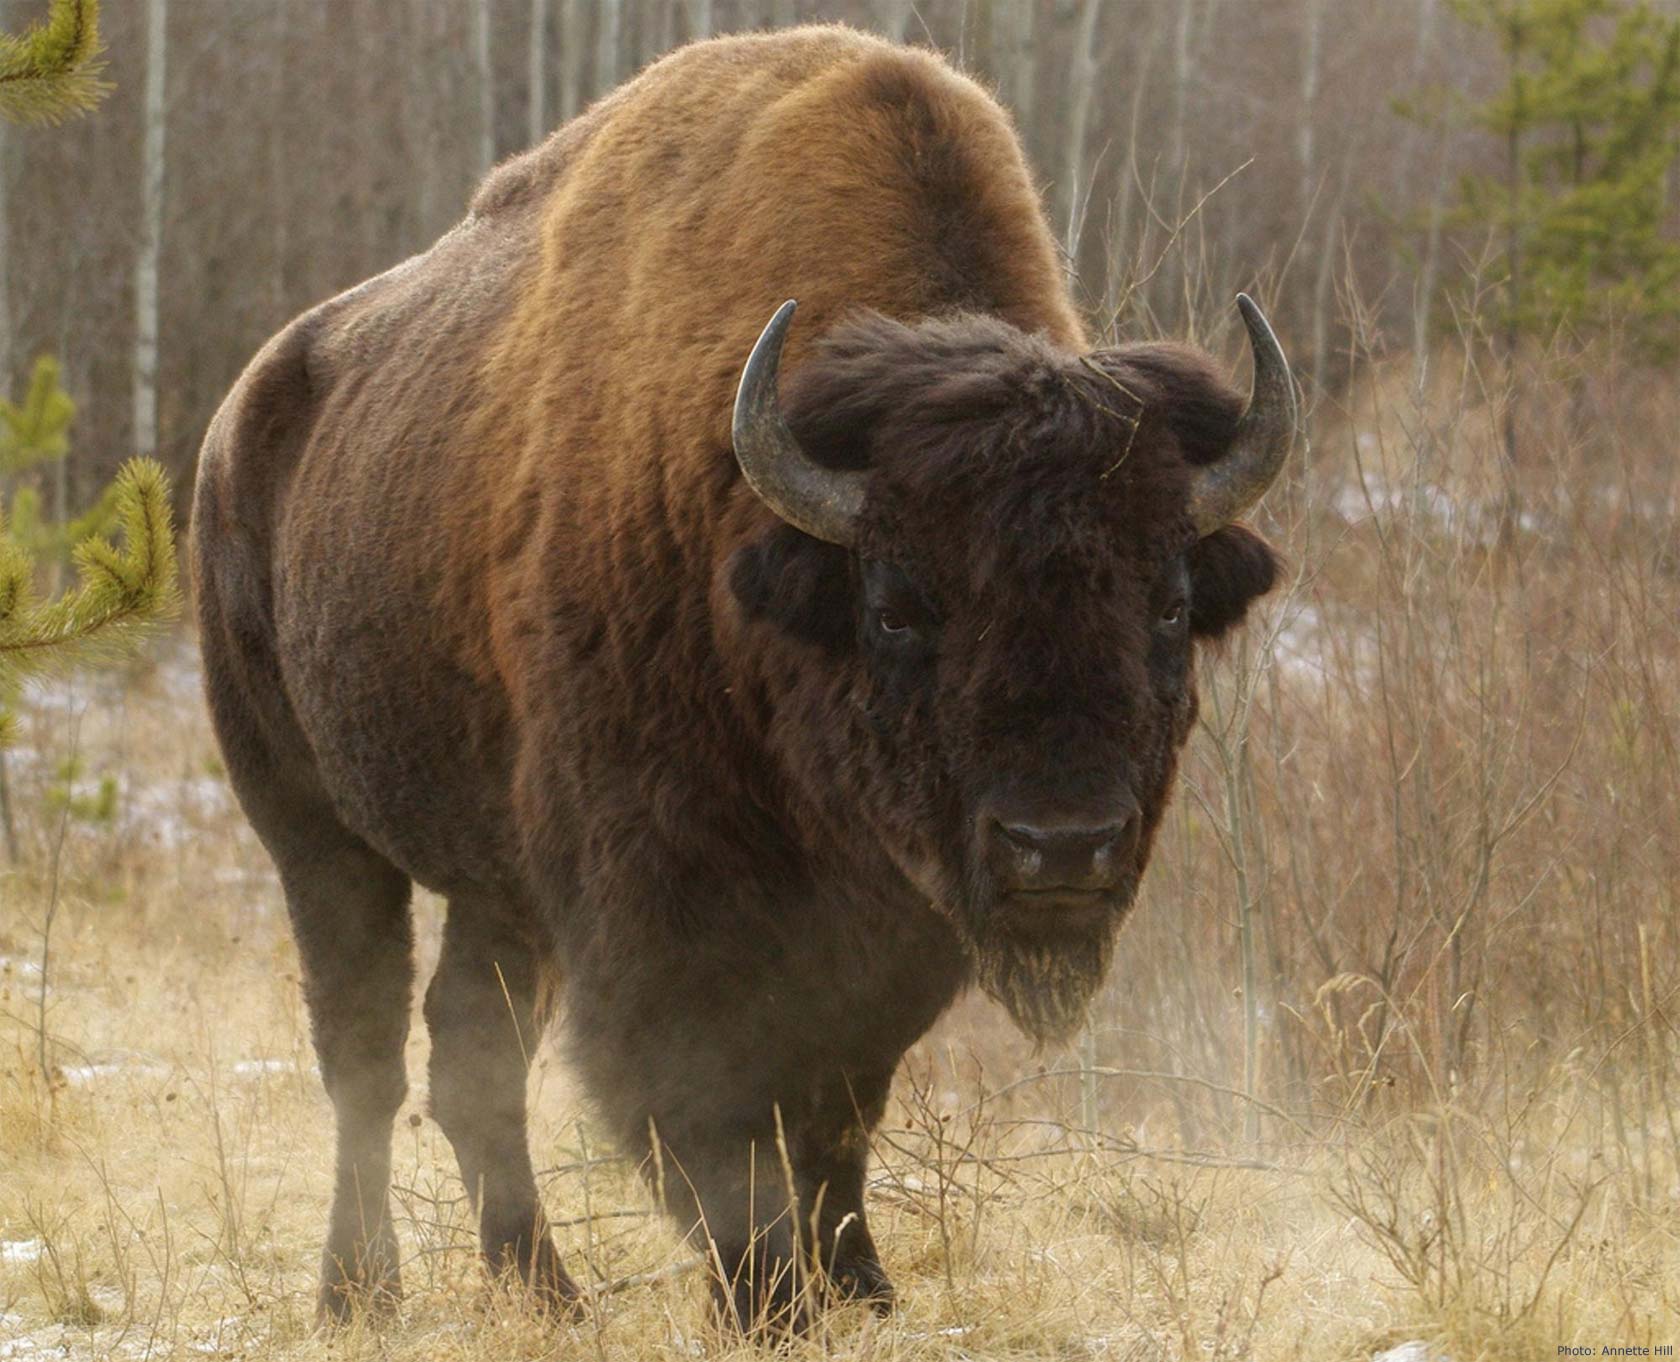 Canadian Wildlife Federation: North American Bison